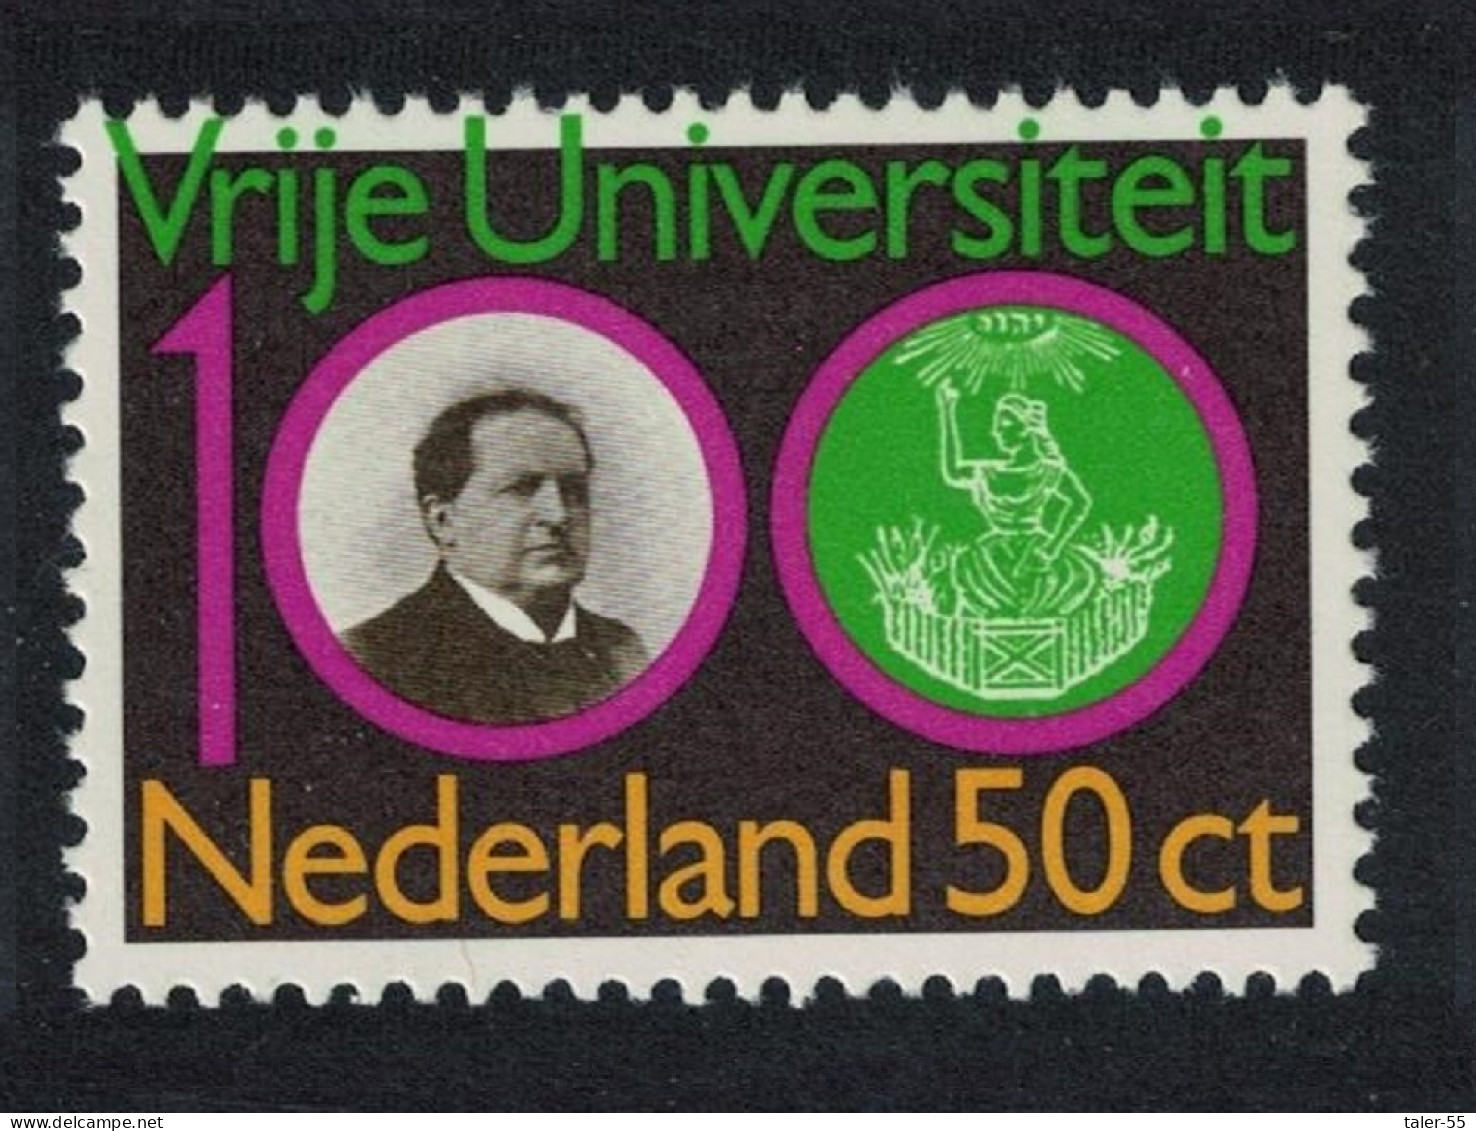 Netherlands Amsterdam Free University 1980 MNH SG#1347 MI#1170 Sc#607 - Unused Stamps